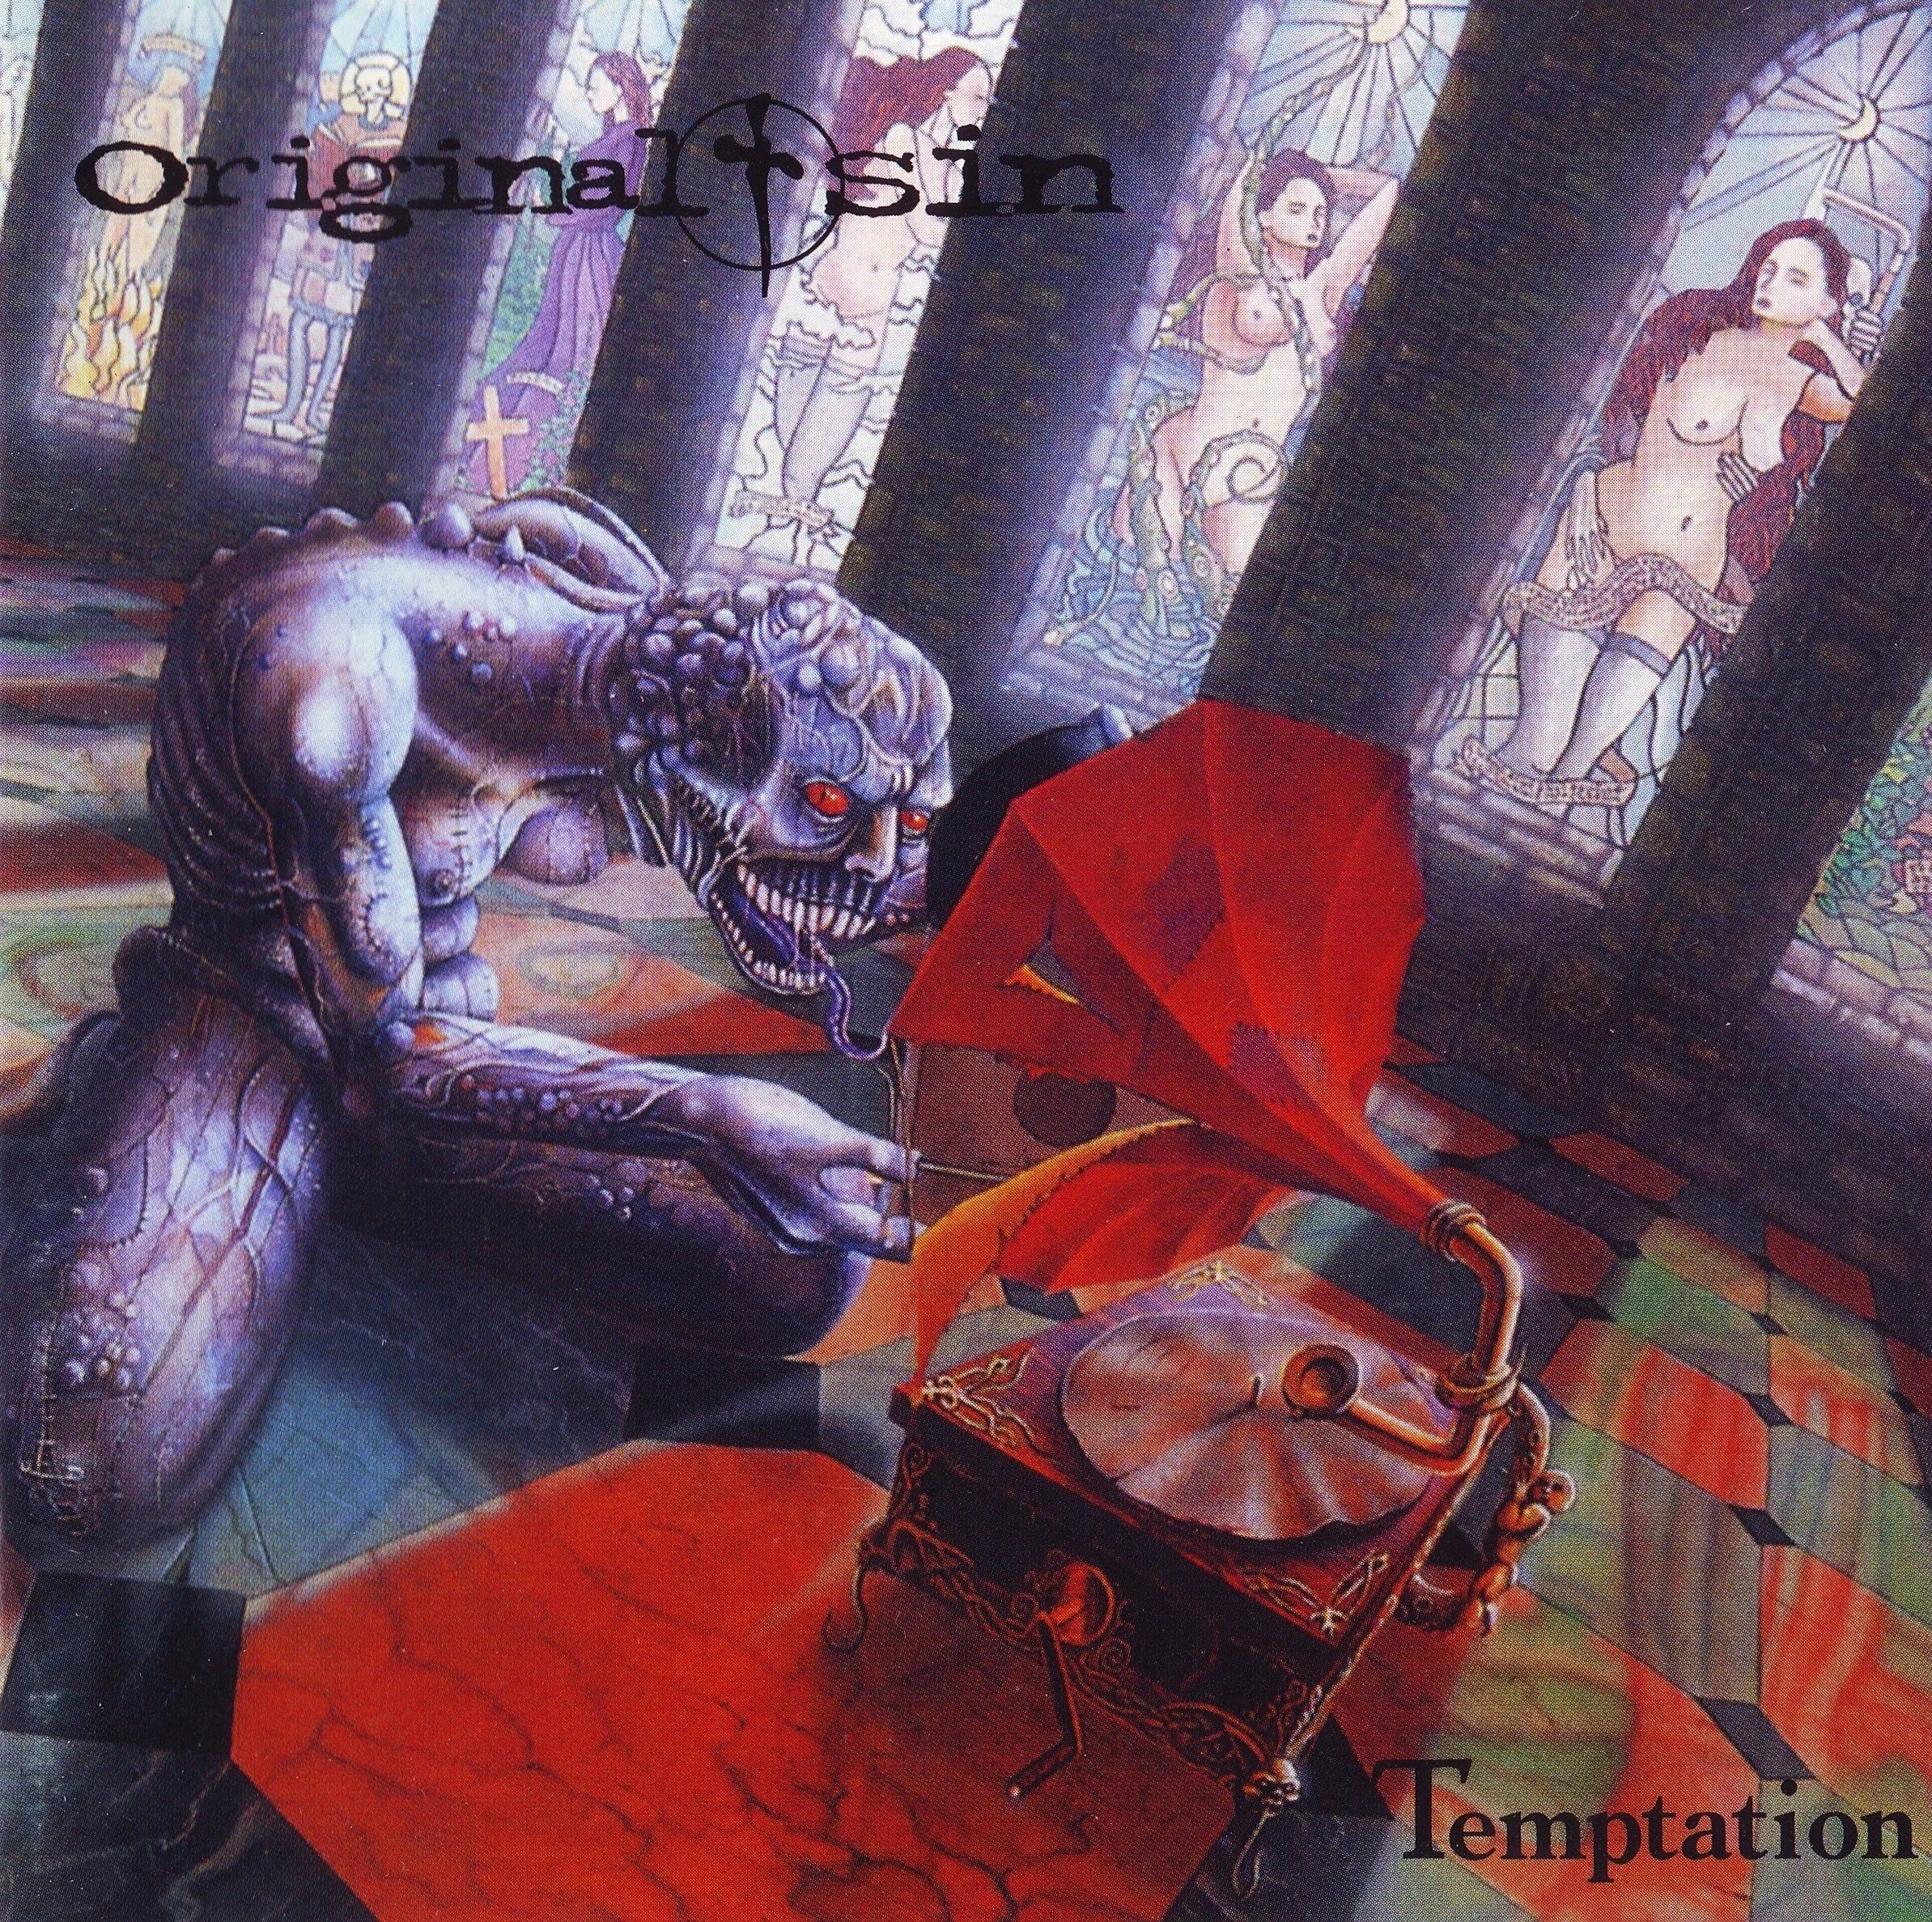 Original sin. Temptation 8 (1997). Temptation txt обложка. Ласт син ресентли